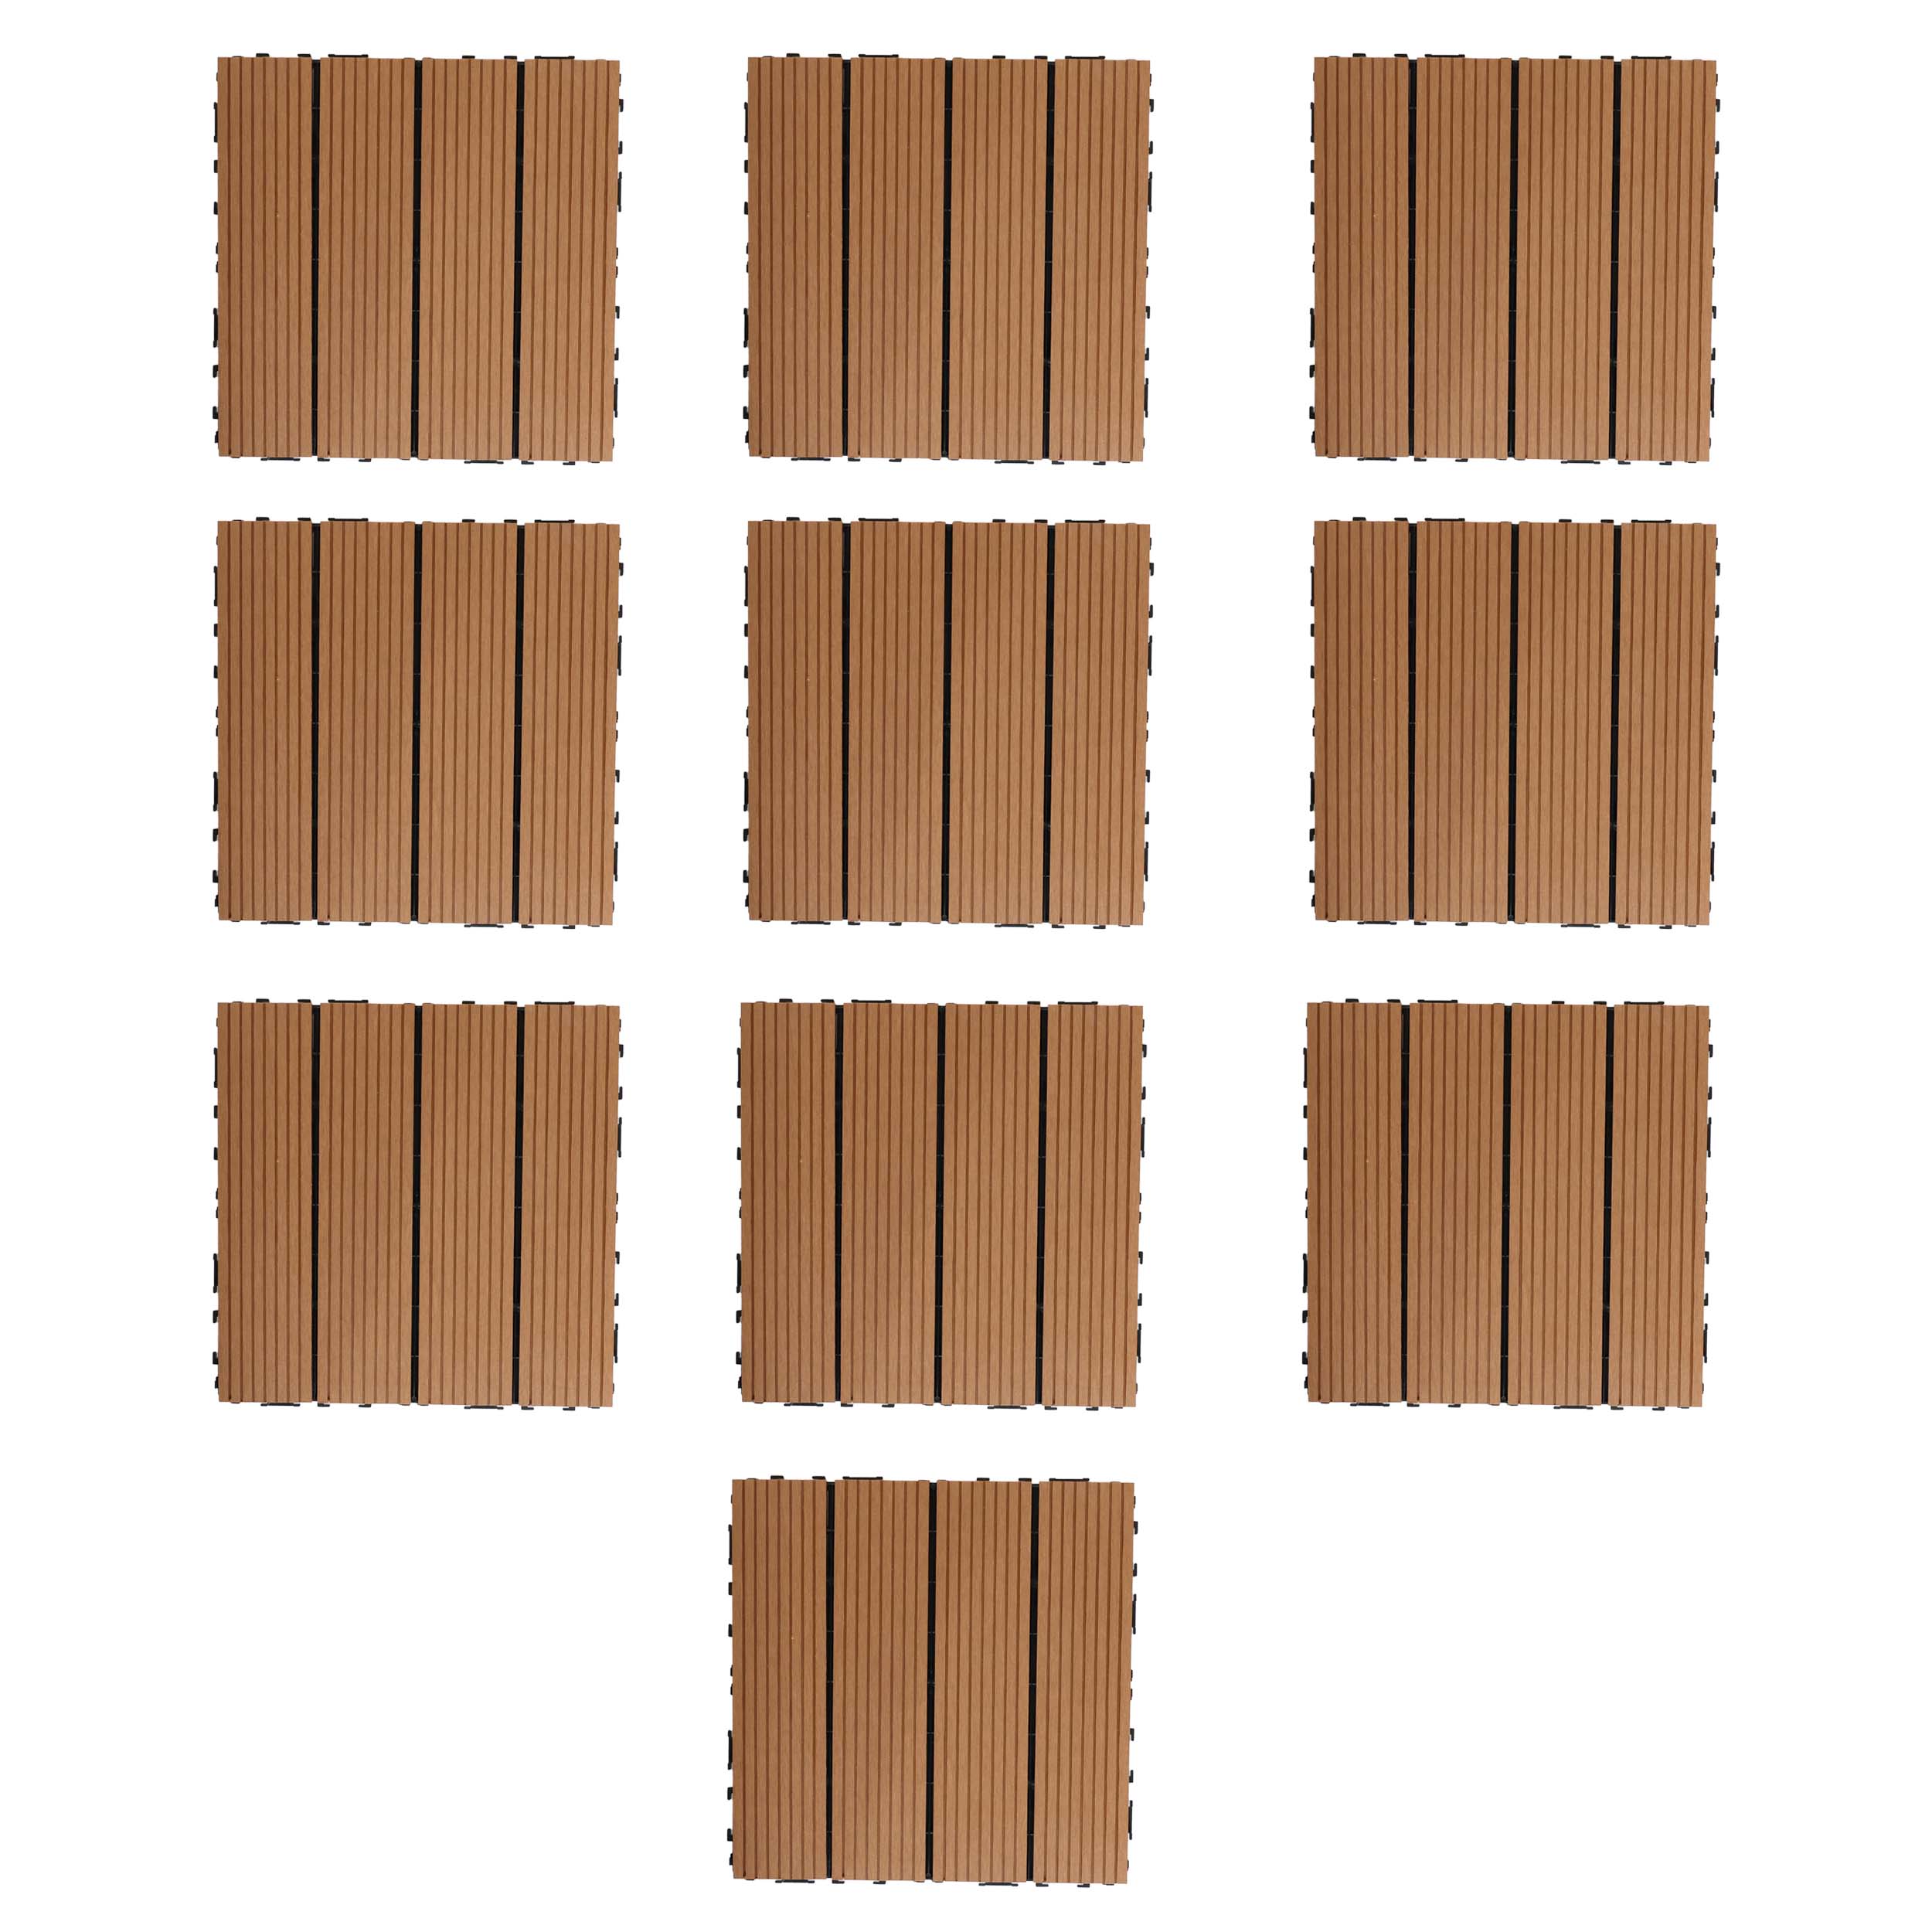 Aavana Greens WPC Deck Tiles 12"X12" Natual Teak